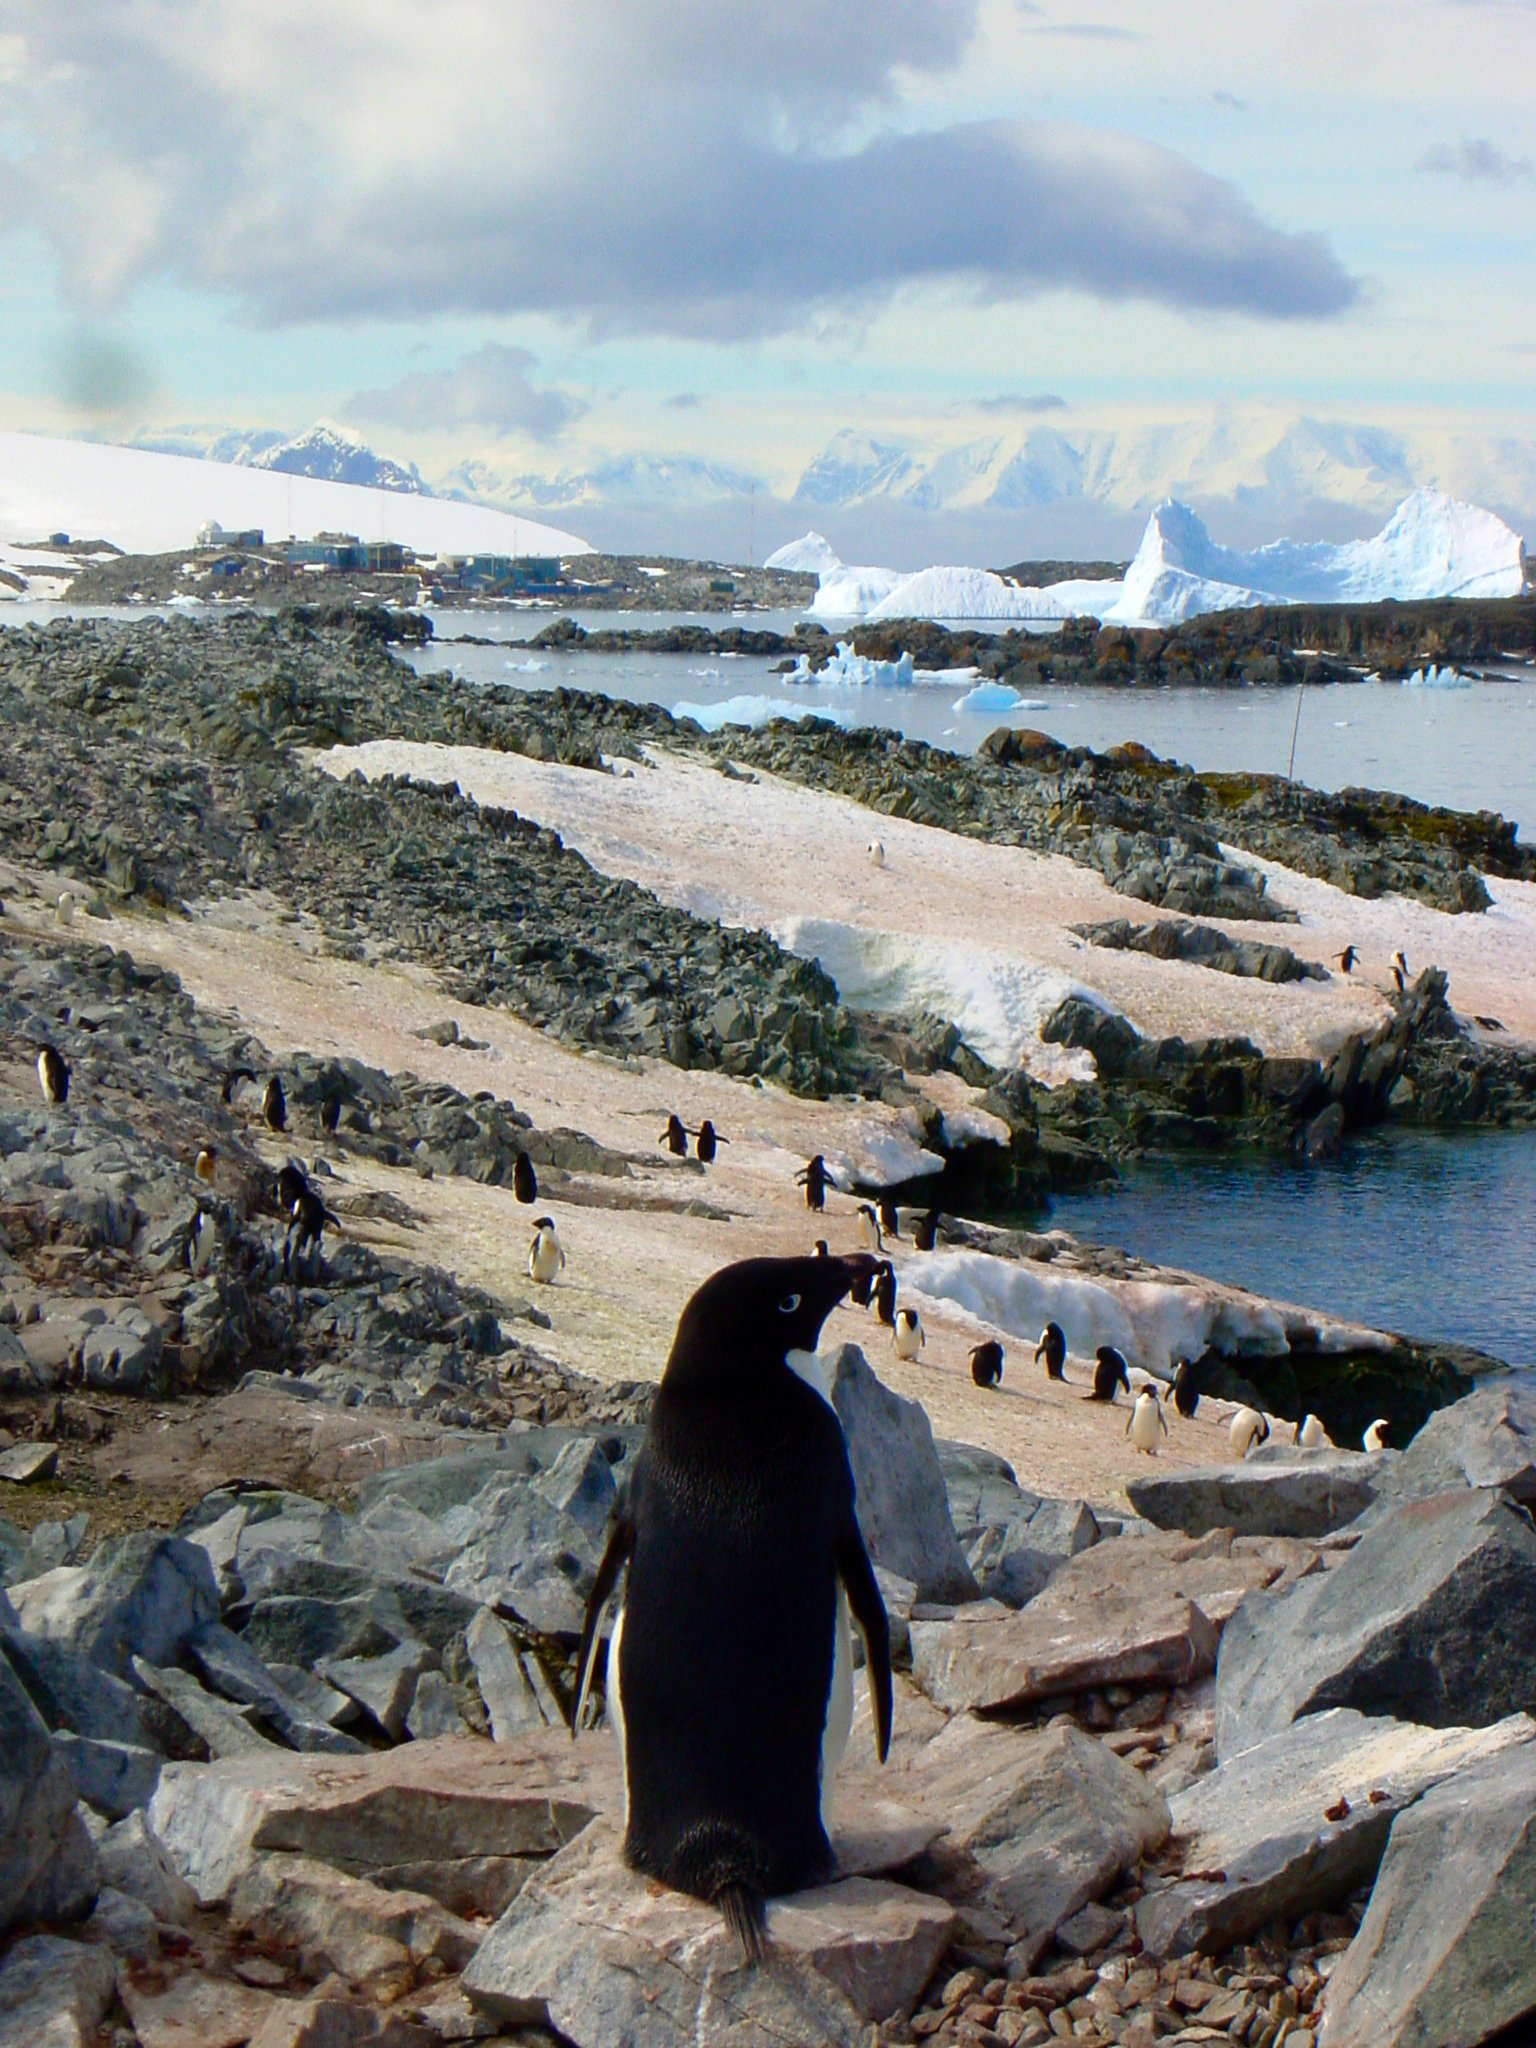 A colony of penguins near the ocean.